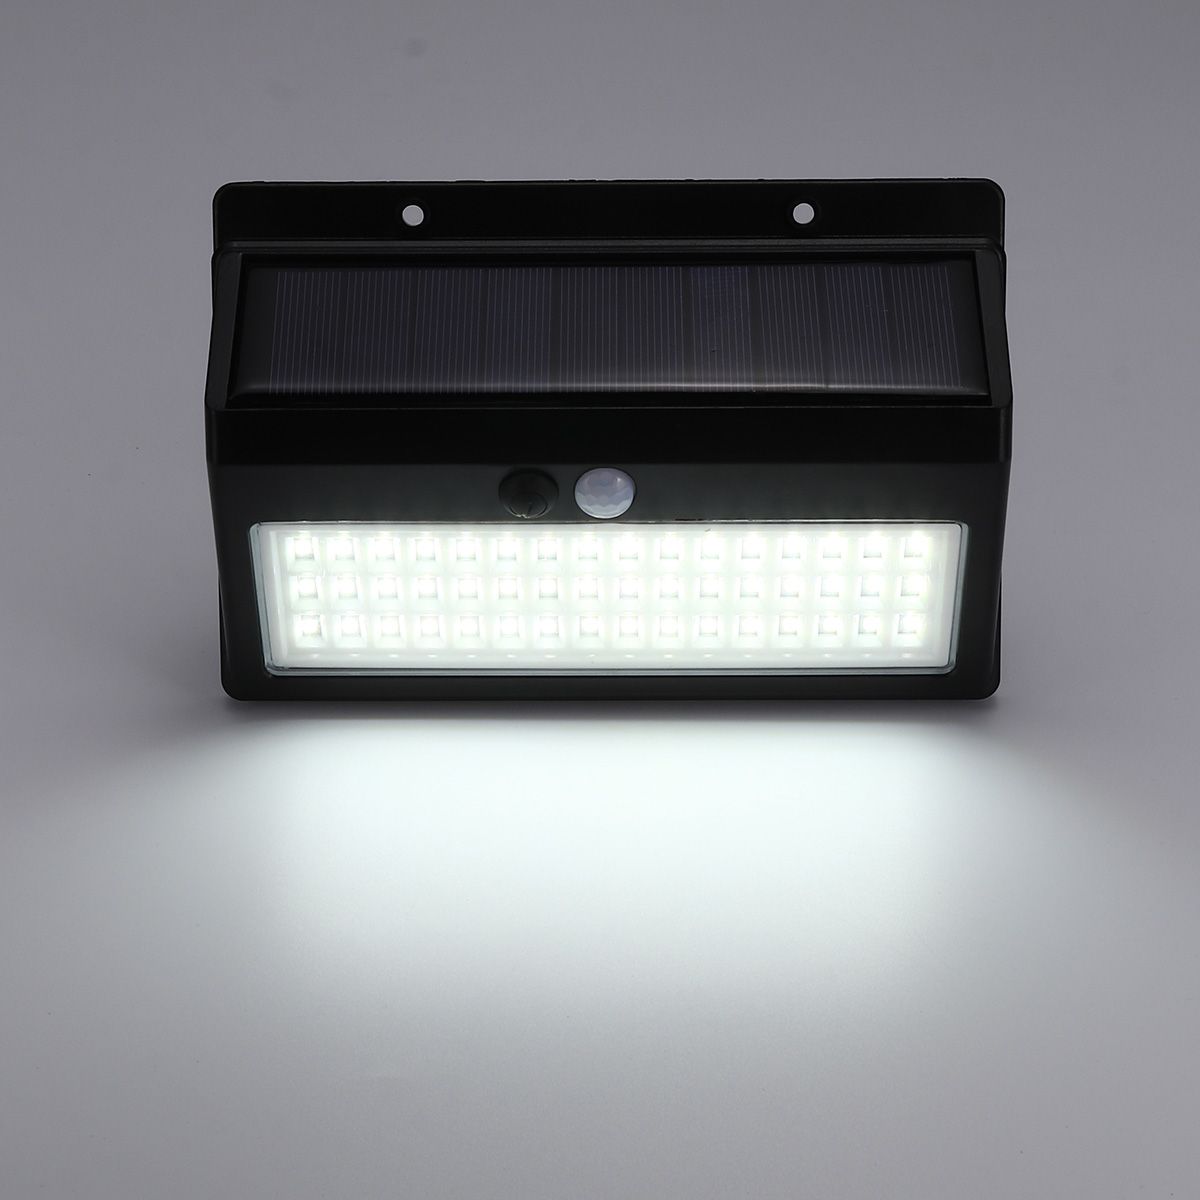 Outdoor-LED-Solar-Powered-Light-3-Modes-PIR-Sensor-Security-Waterproof-Wall-Lamp-for-Garden-Street-1688932